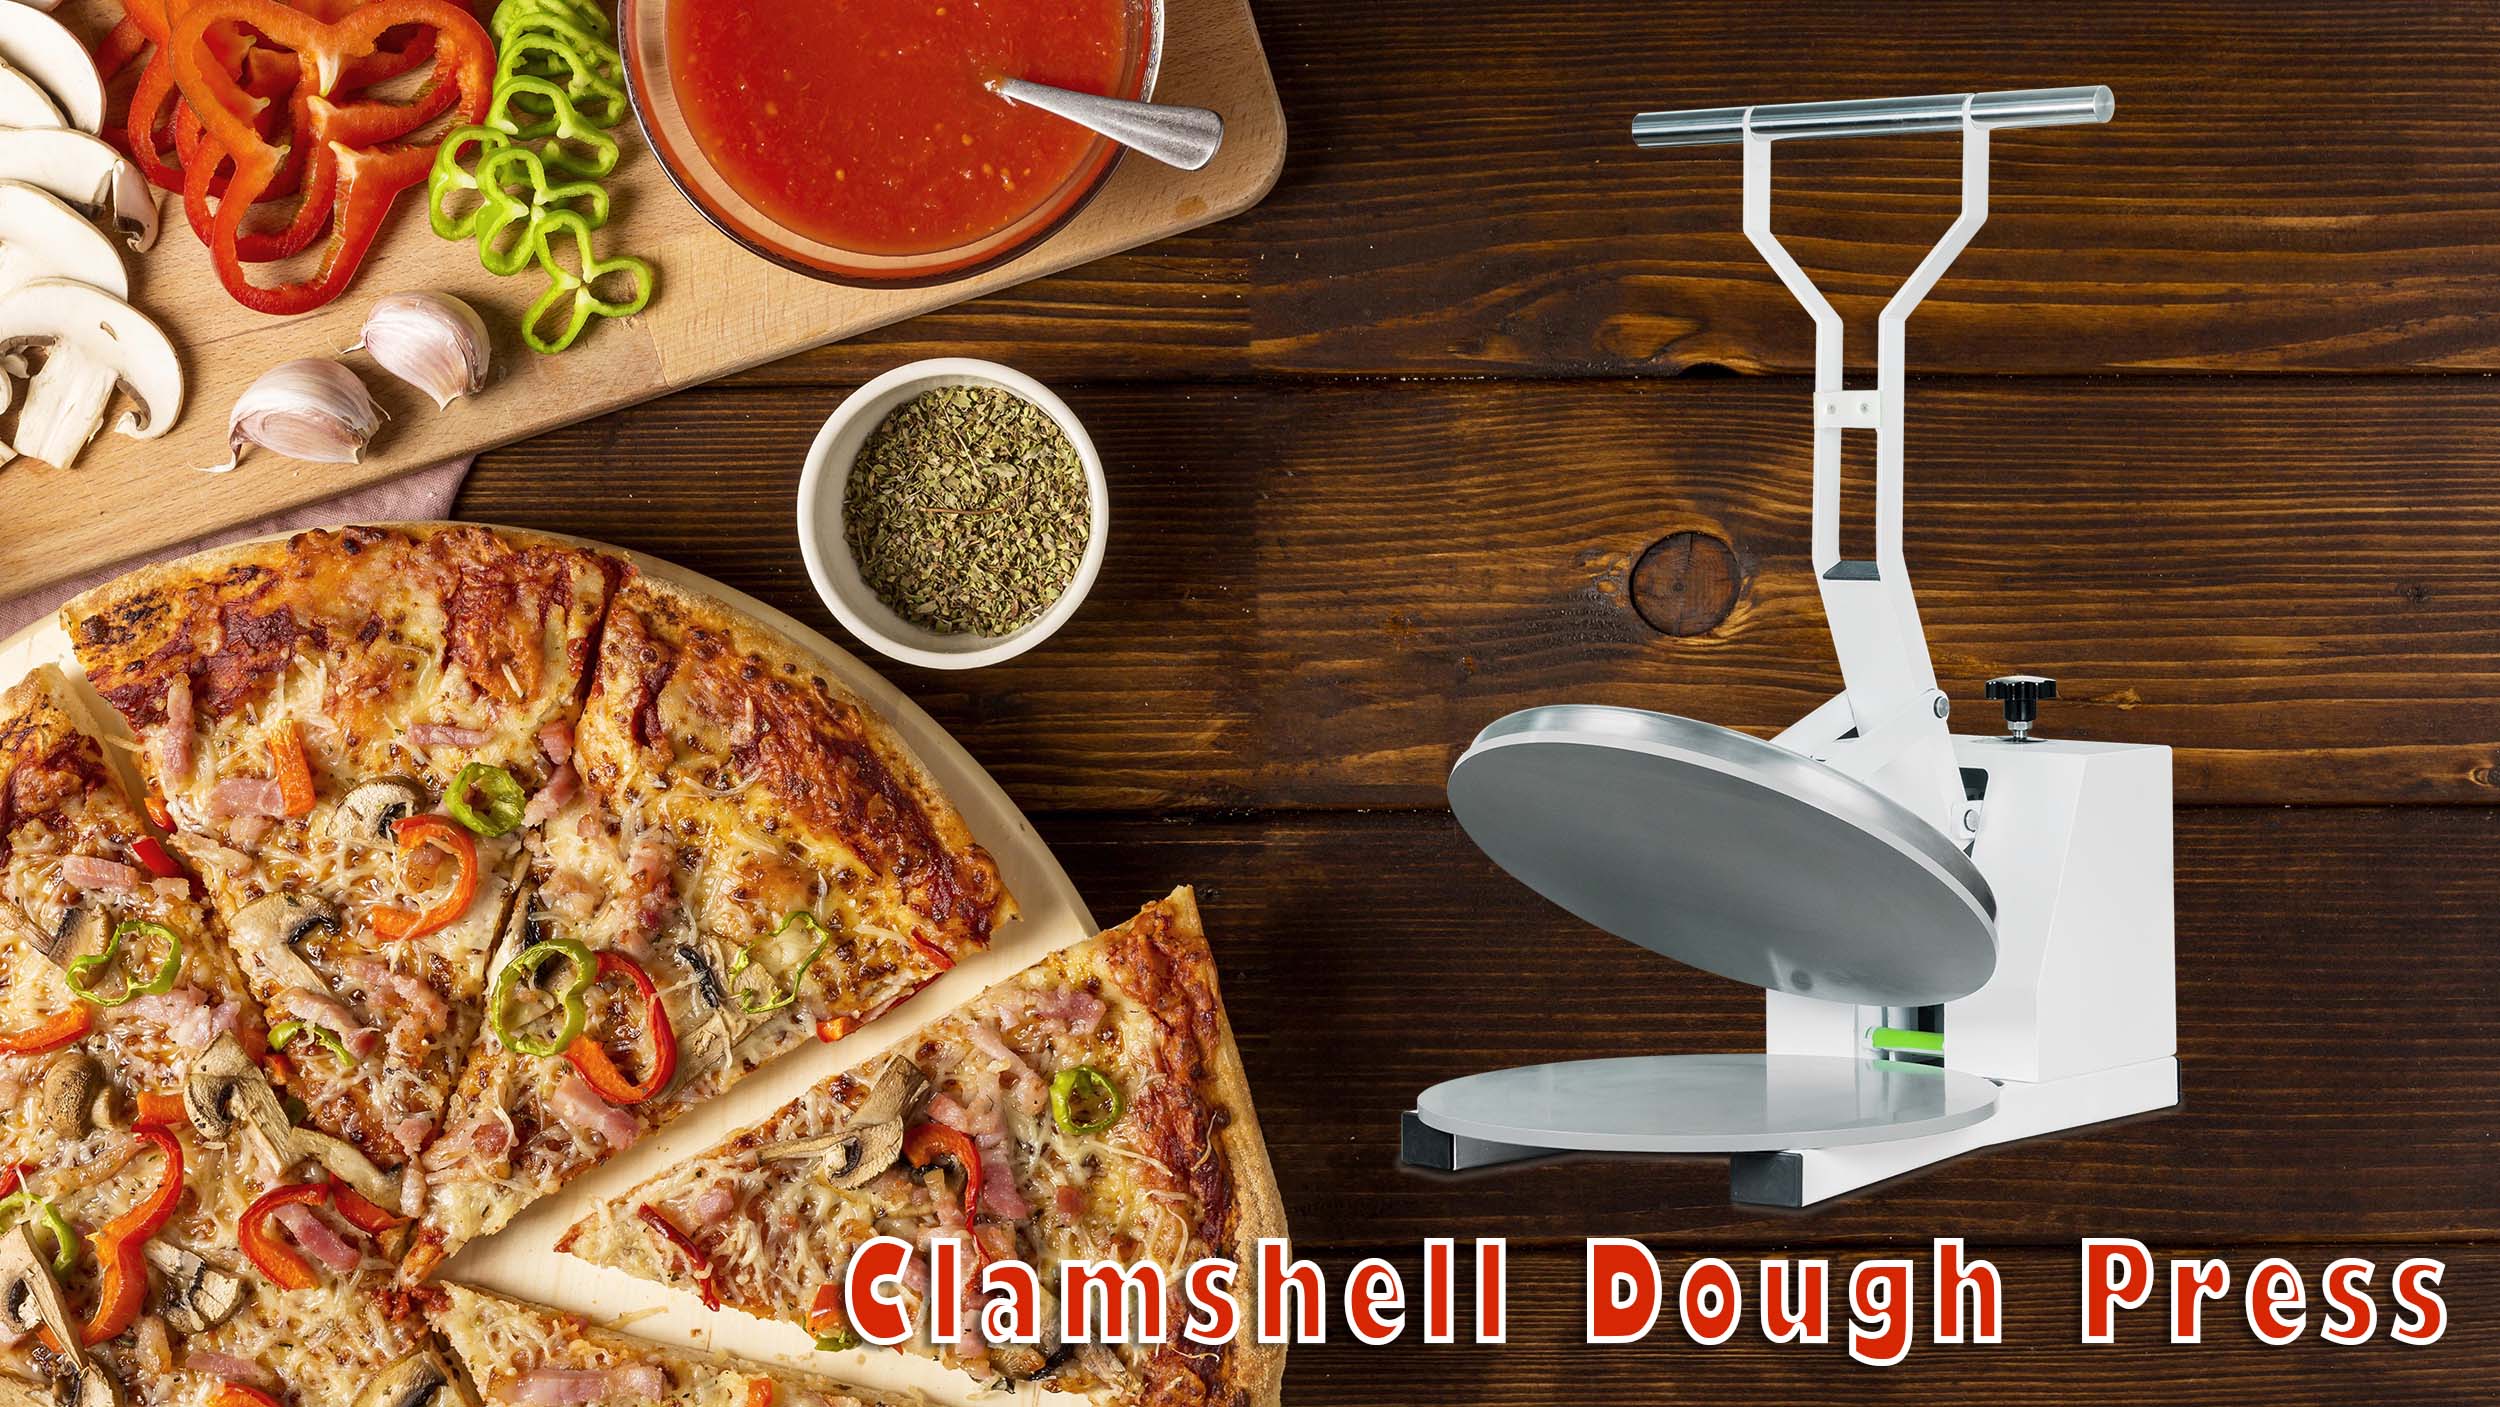 Clamshell Dough Press